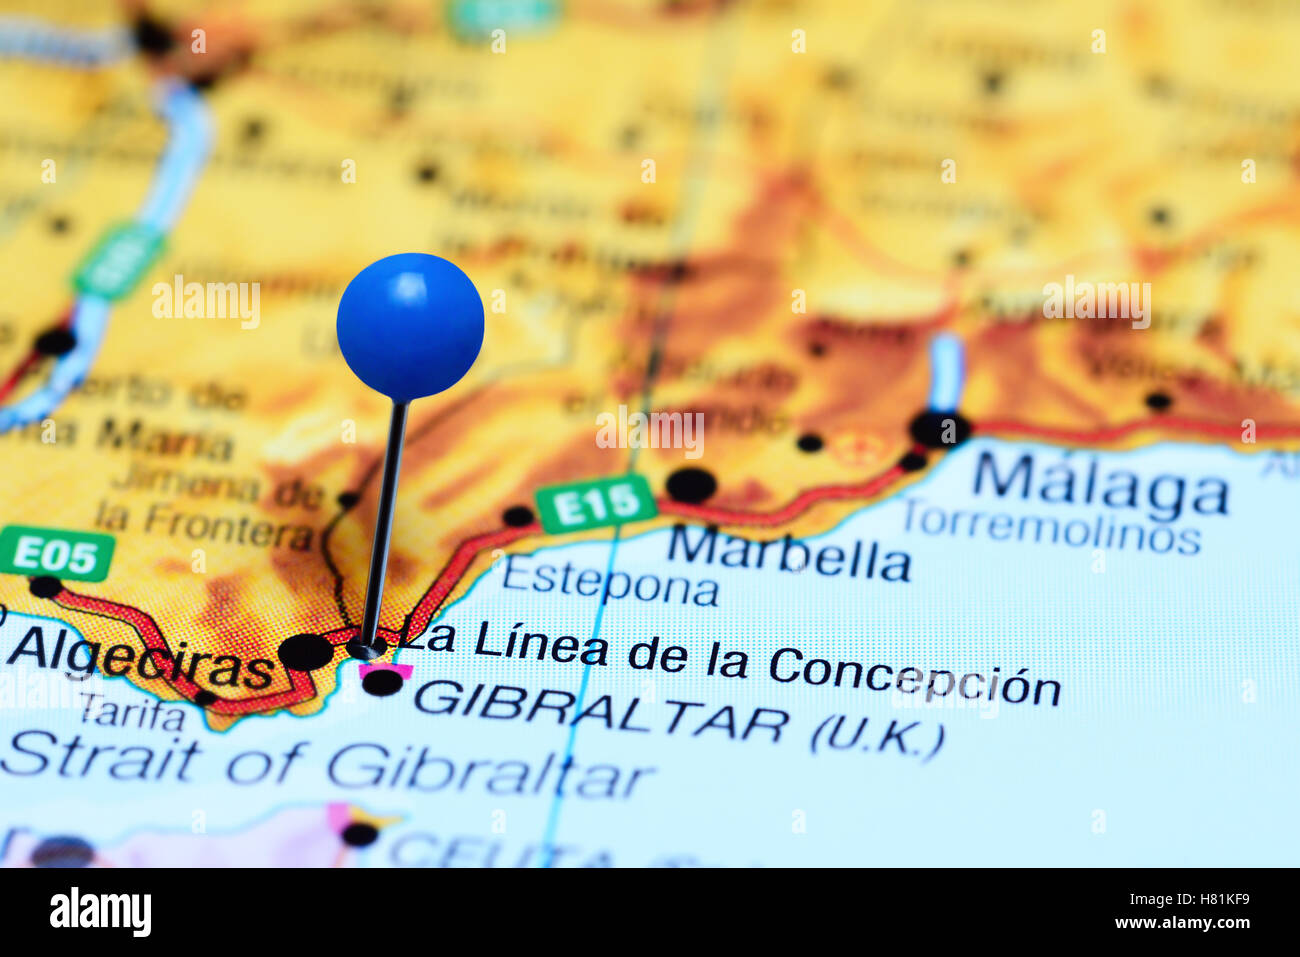 La Linea de la Concepcion pinned on a map of Spain Stock Photo